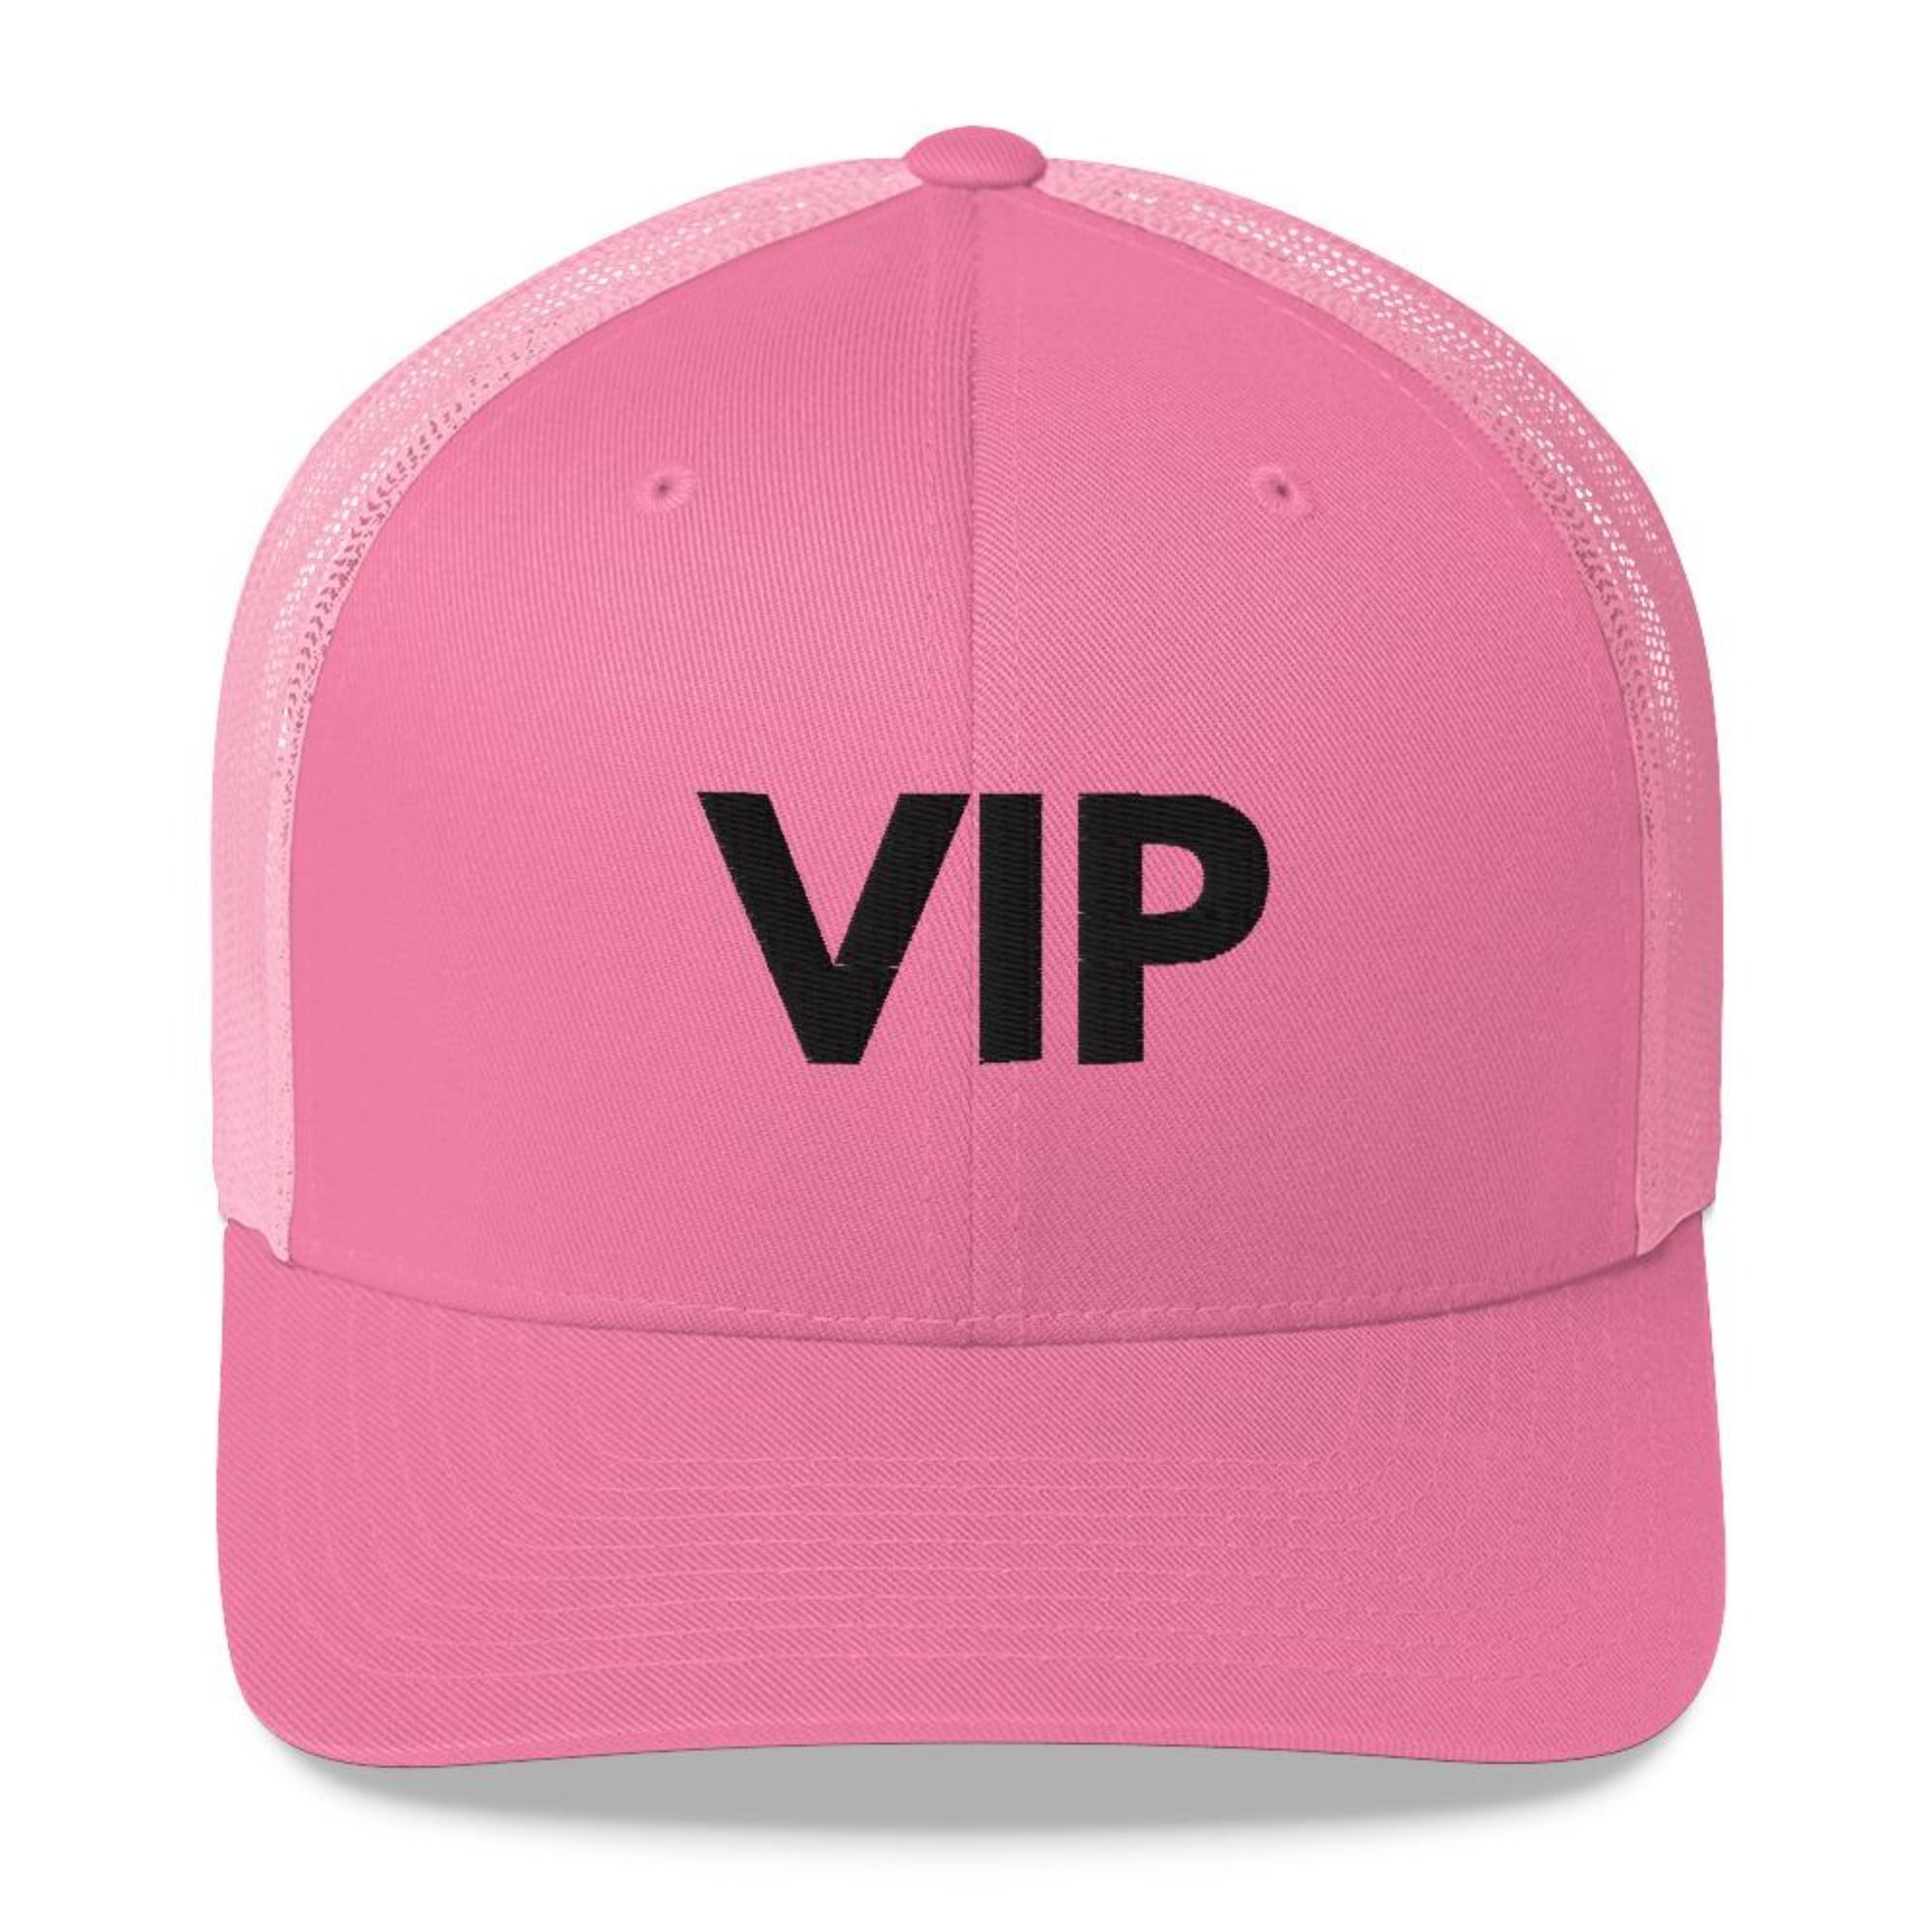 VIP Trucker Adult Cap White/Black/Navy/Pink/Orange/Tan